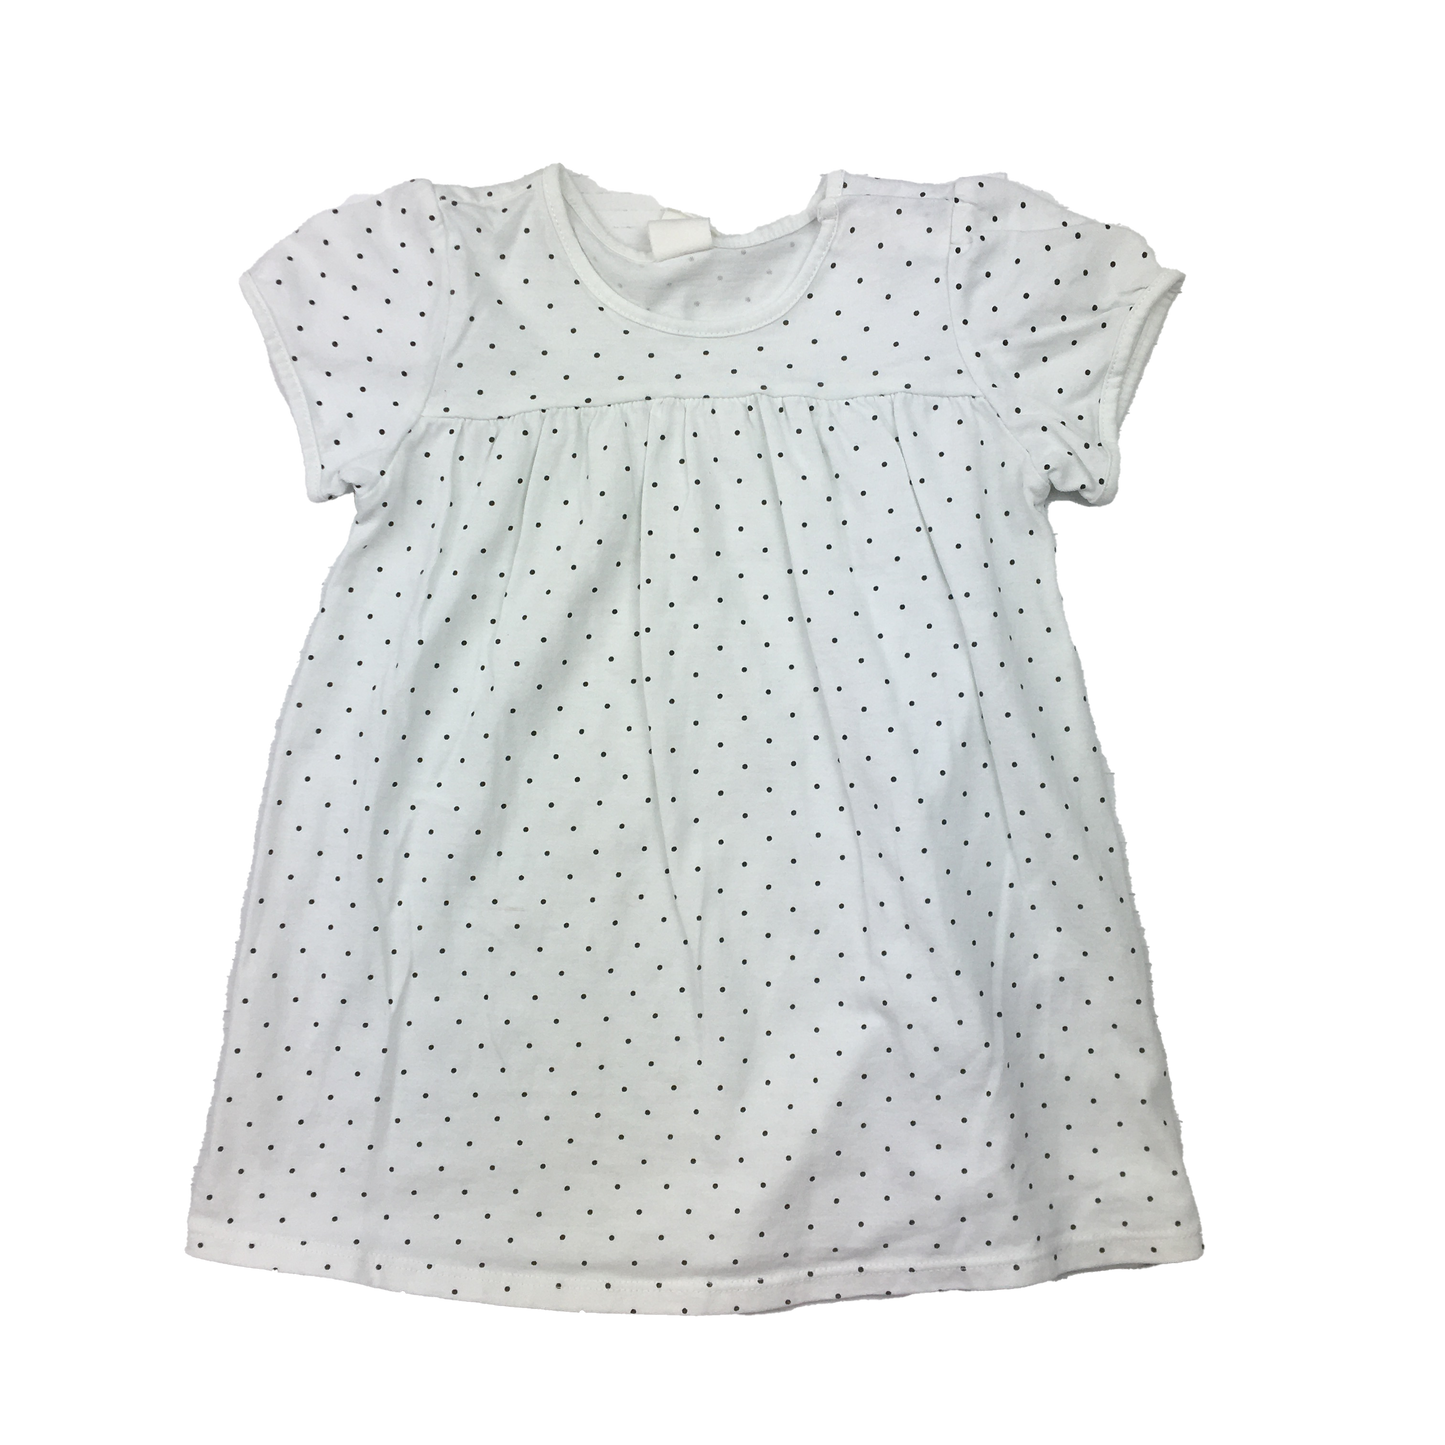 H&M White Dress with Black Polka Dots 12-18M